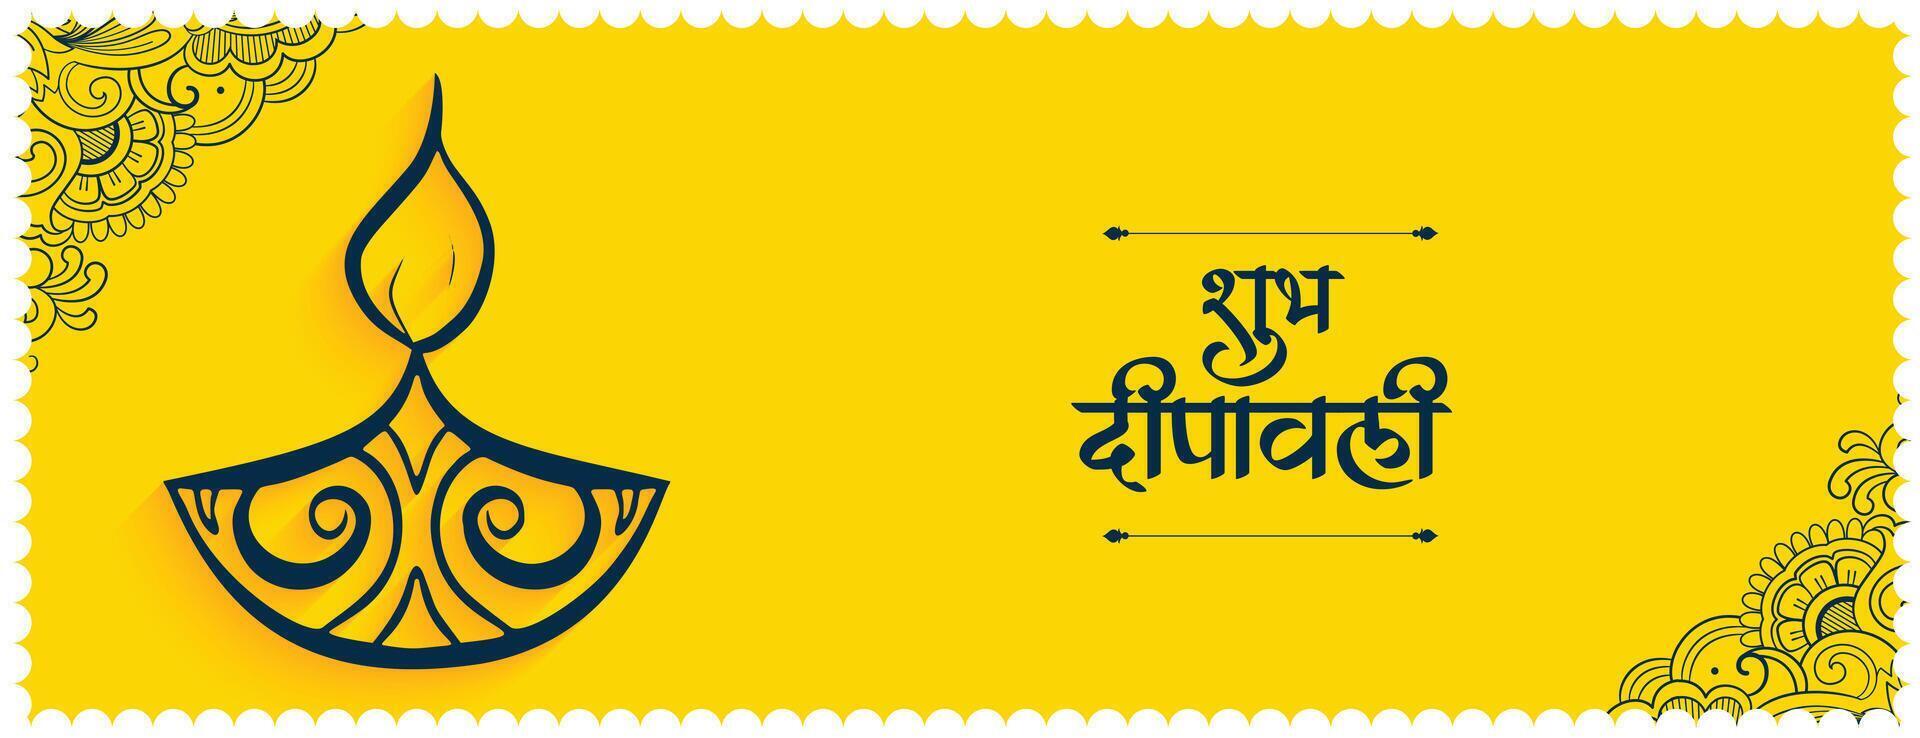 shubh deepavali yellow banner with ethnic diya design vector